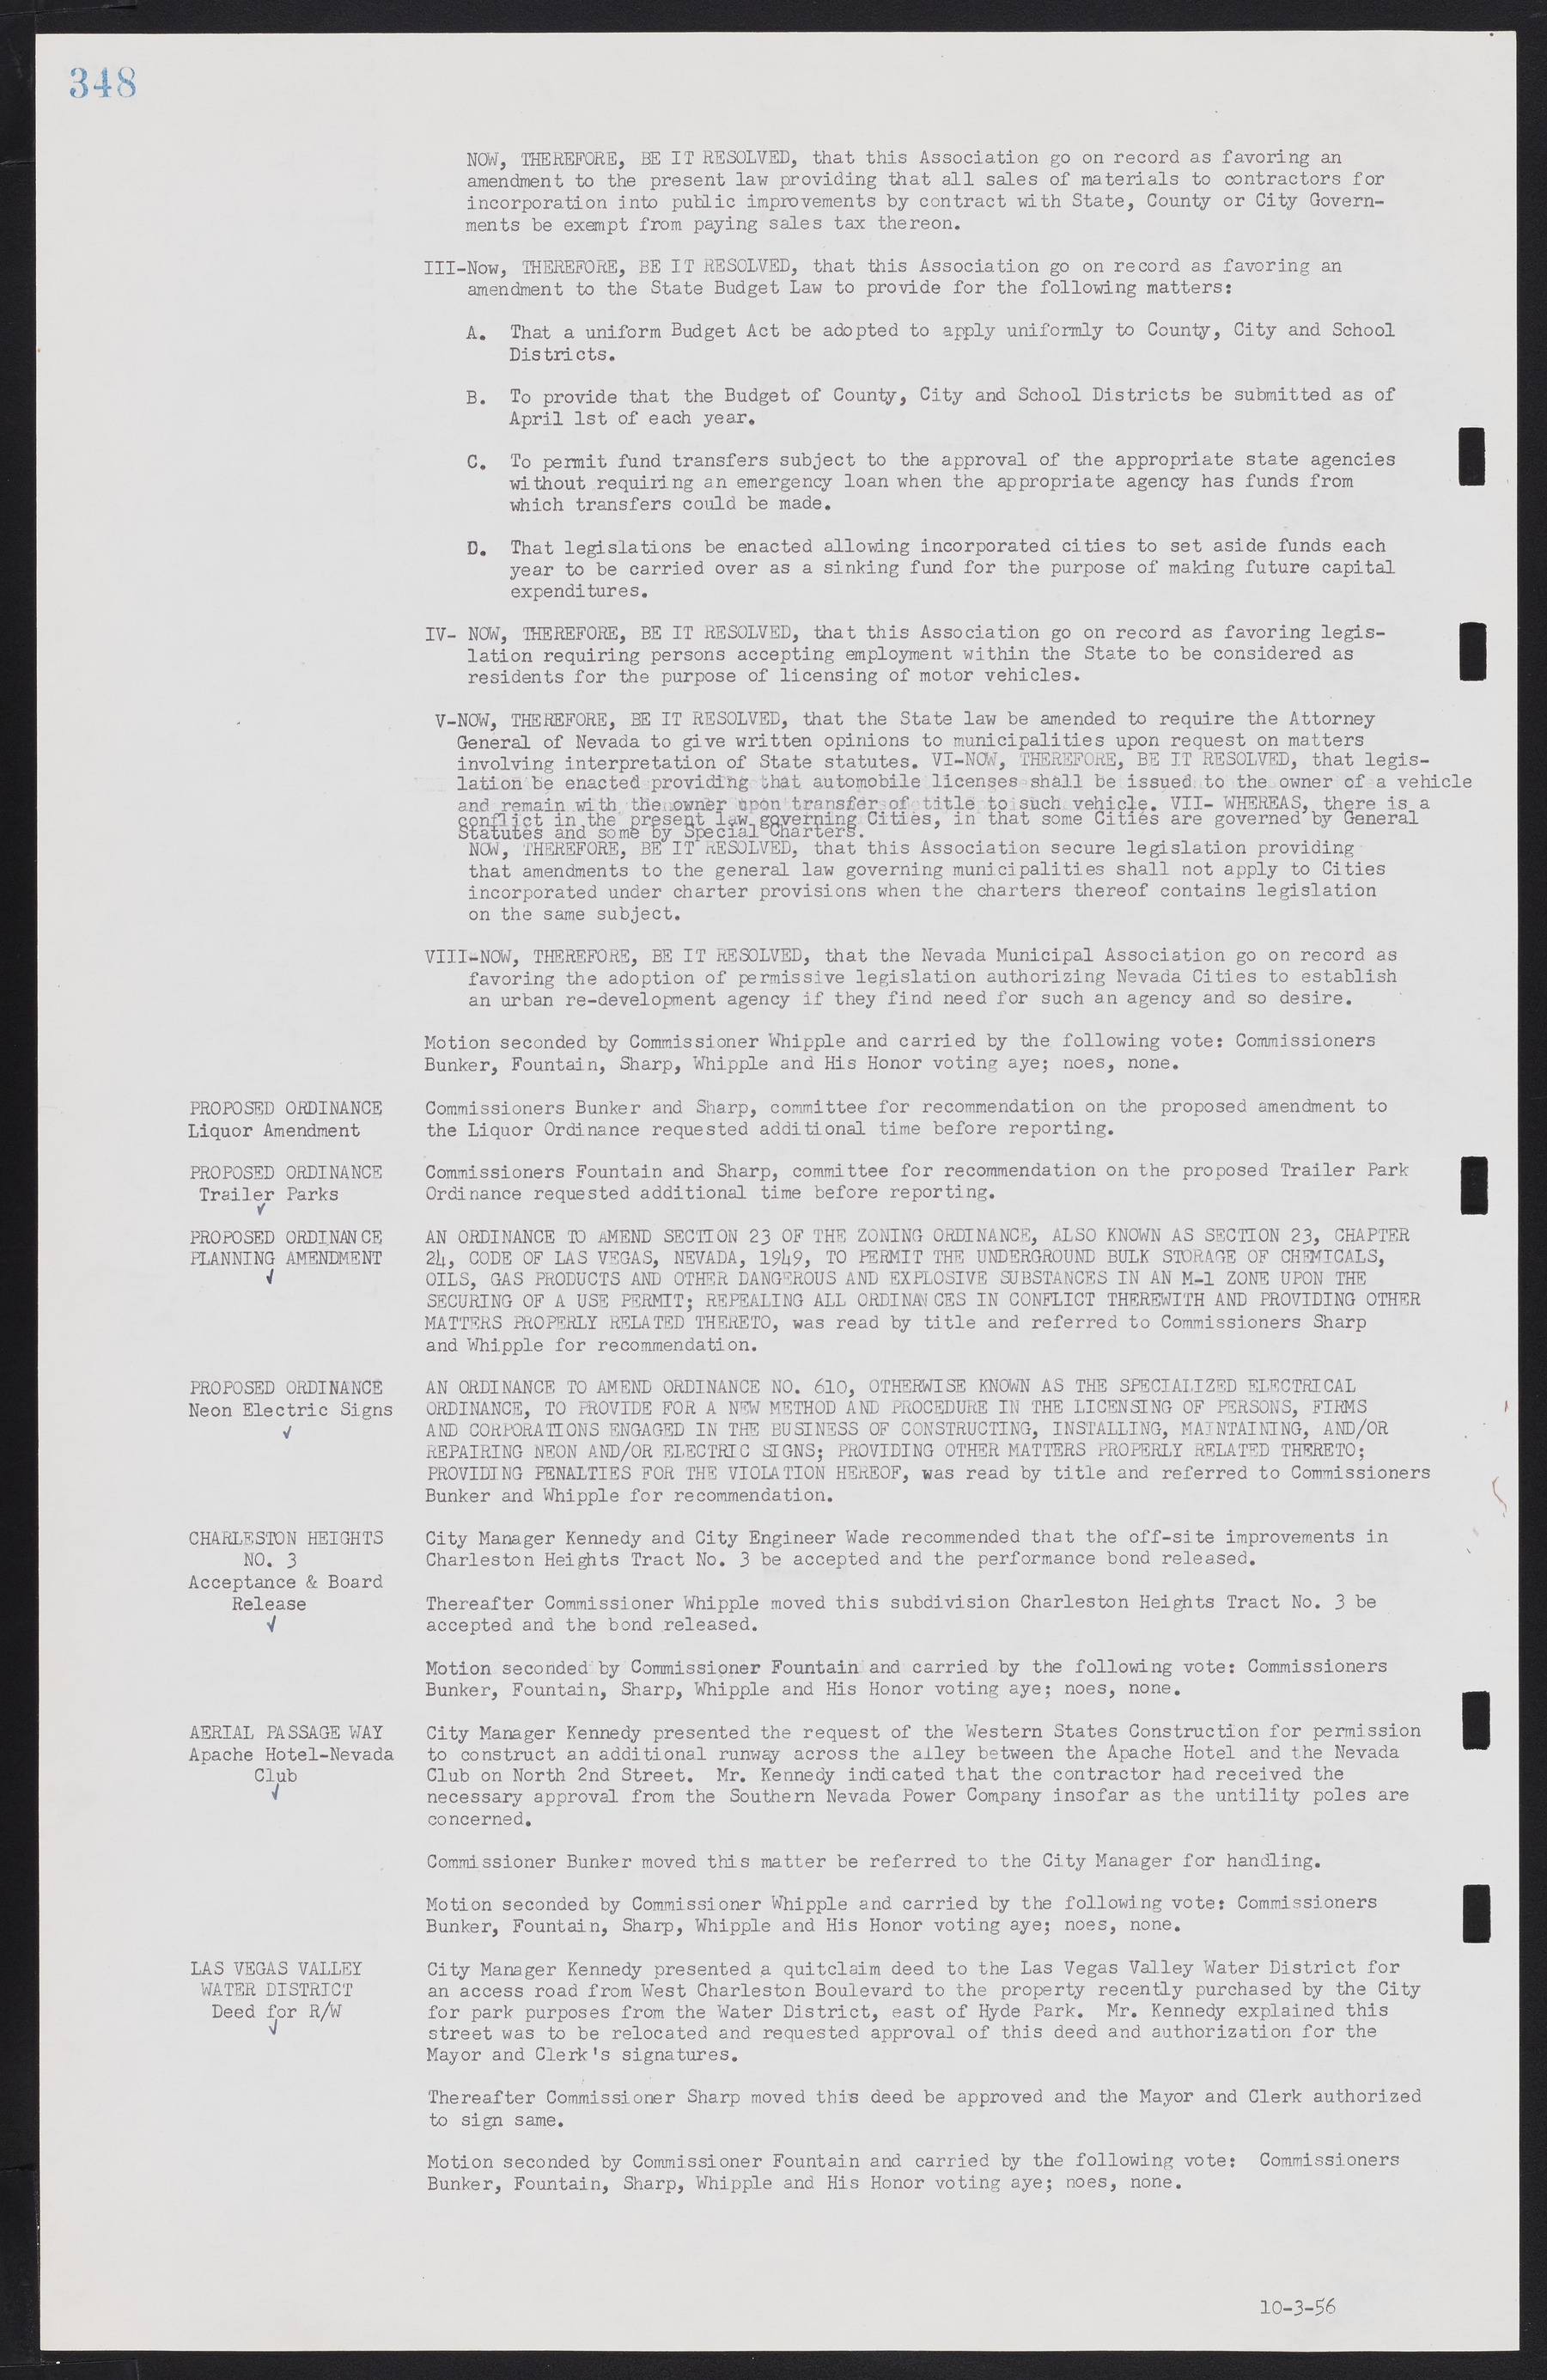 Las Vegas City Commission Minutes, September 21, 1955 to November 20, 1957, lvc000010-368